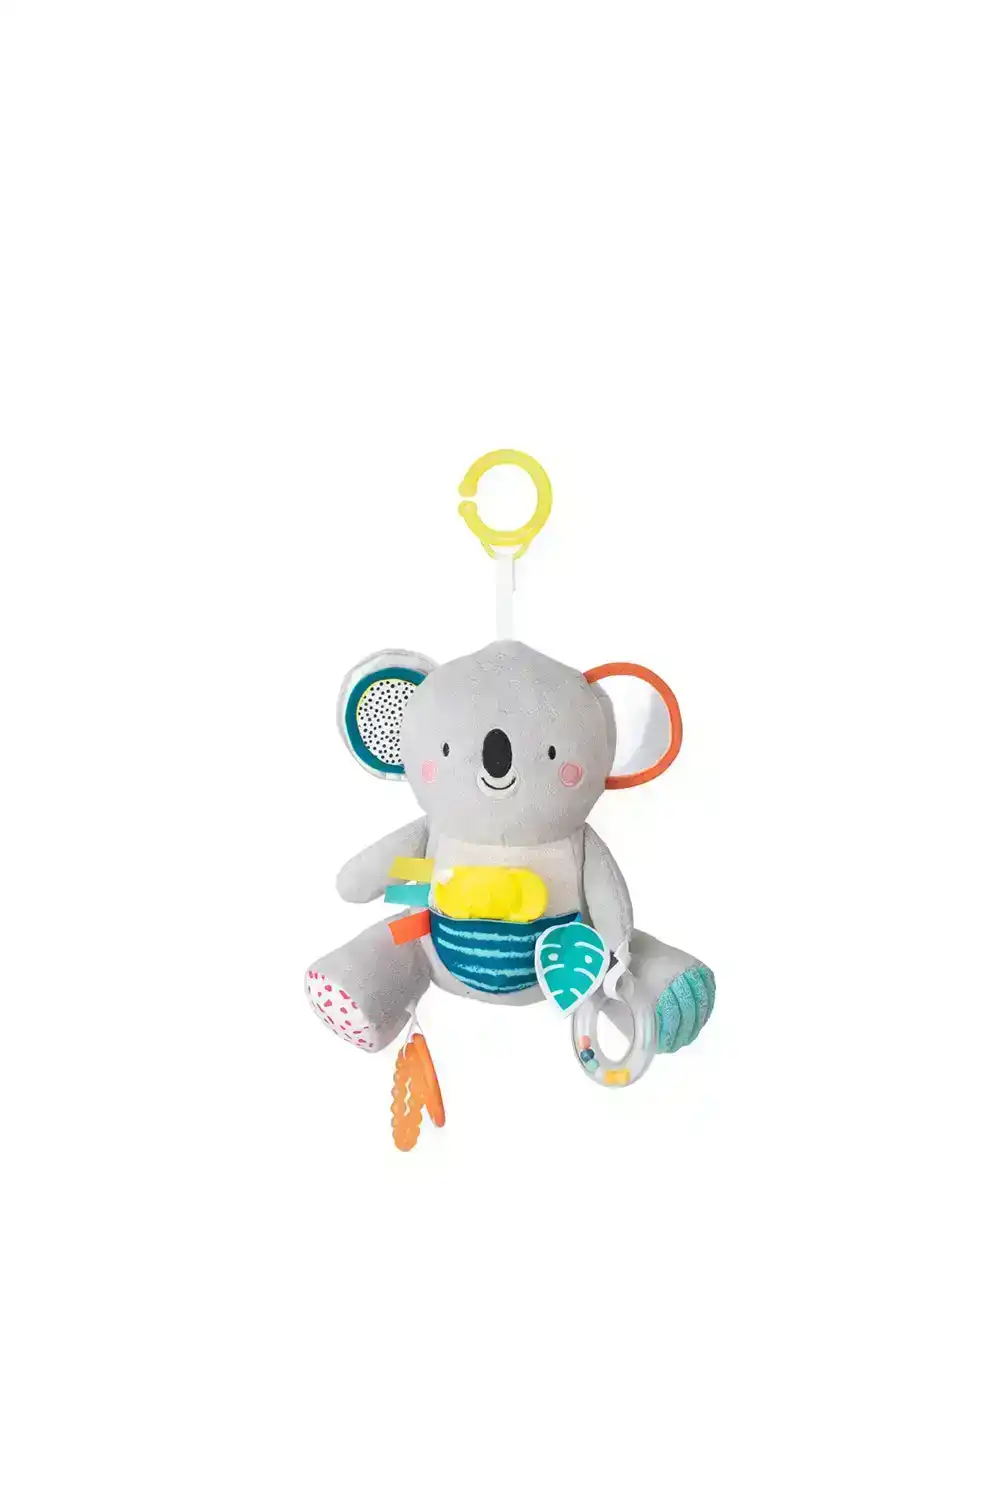 Taf Toys Kimmy Koala Activity Doll Soft Toy/Teether Baby/Infant 0m+ Sensory Play